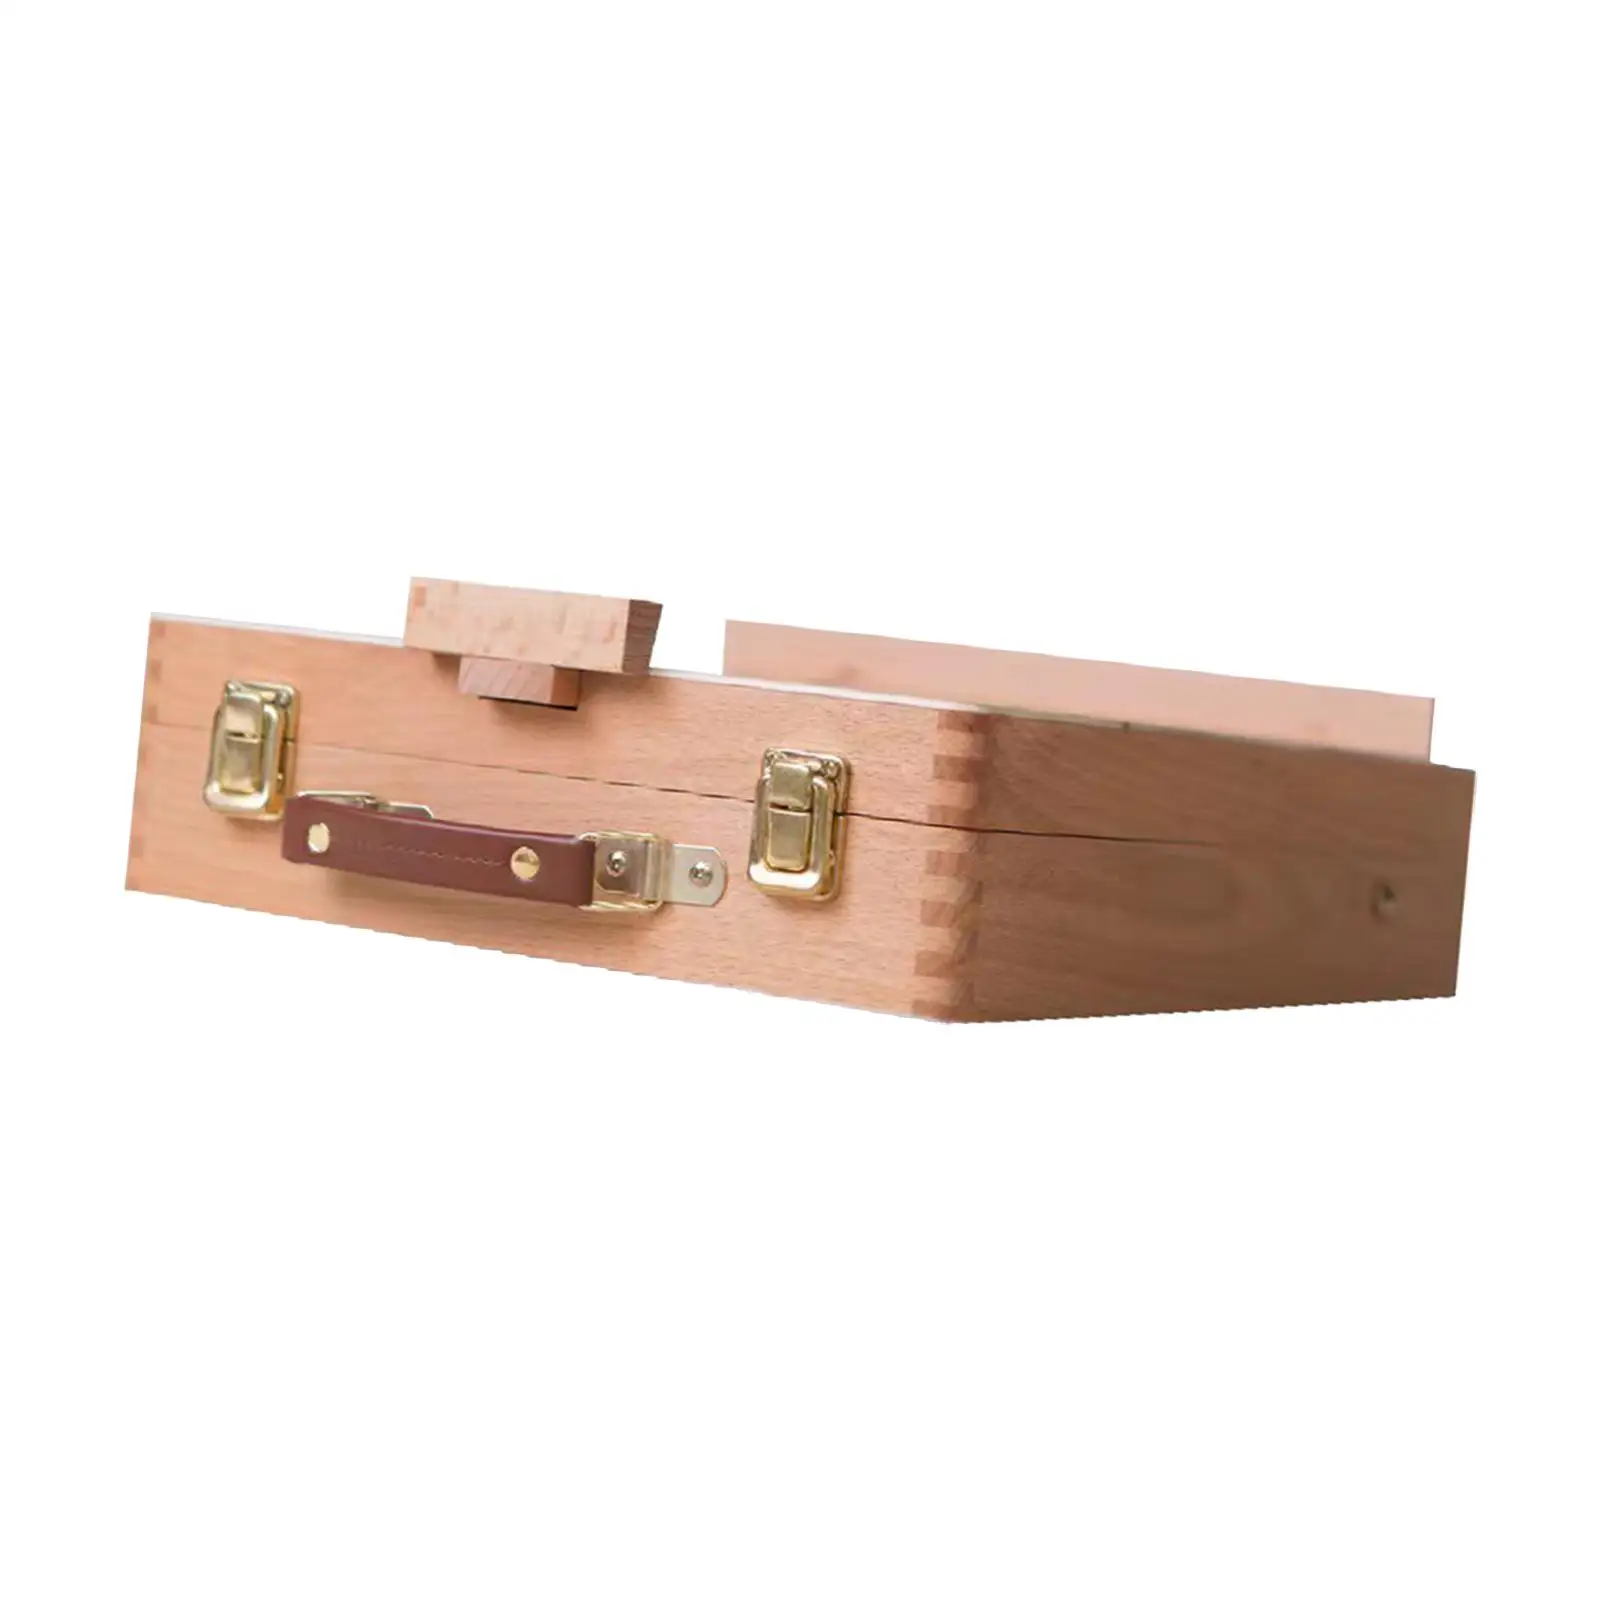 AOOKMIYA Wooden Art Easel Box Portable Wood Tabletop Easel Sketch Box